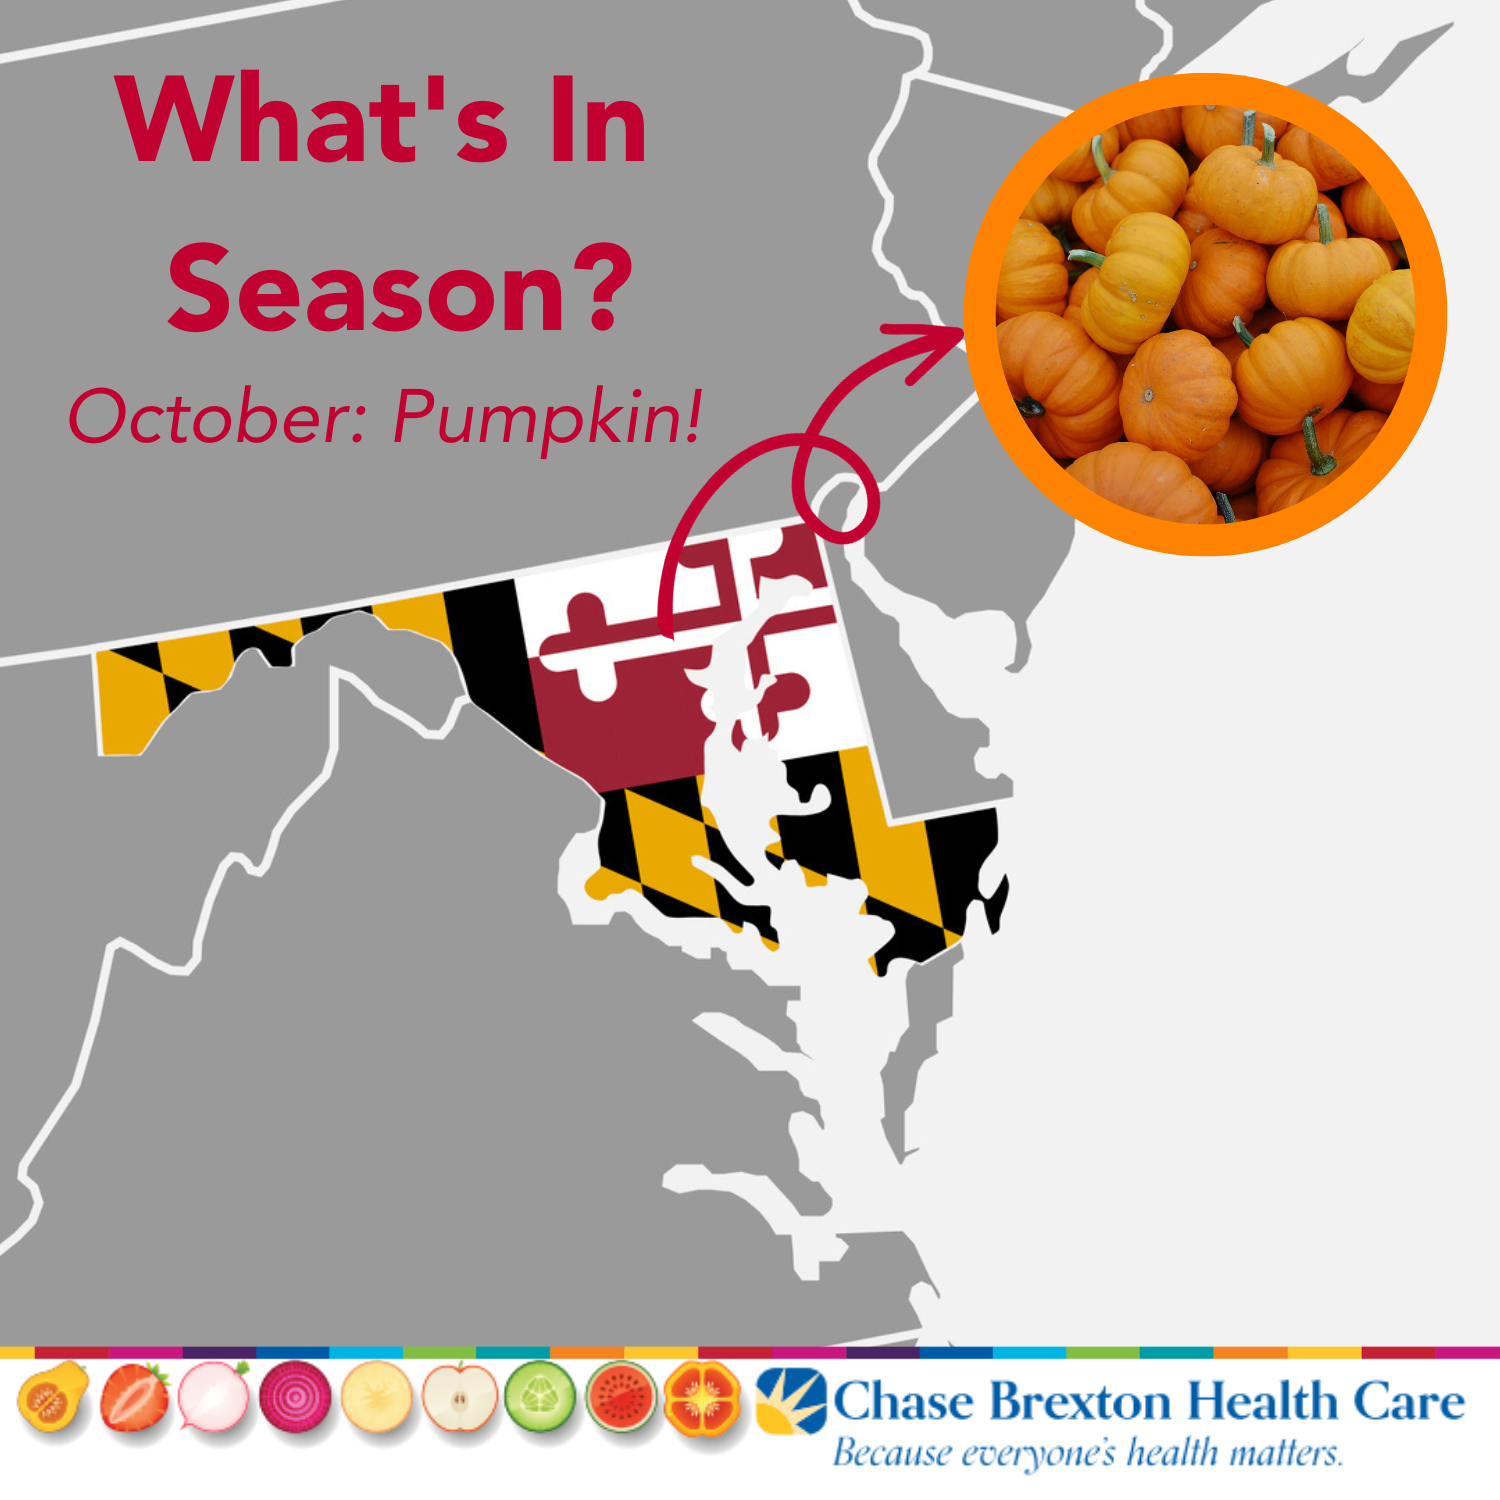 what's in season? October: Pumpkin